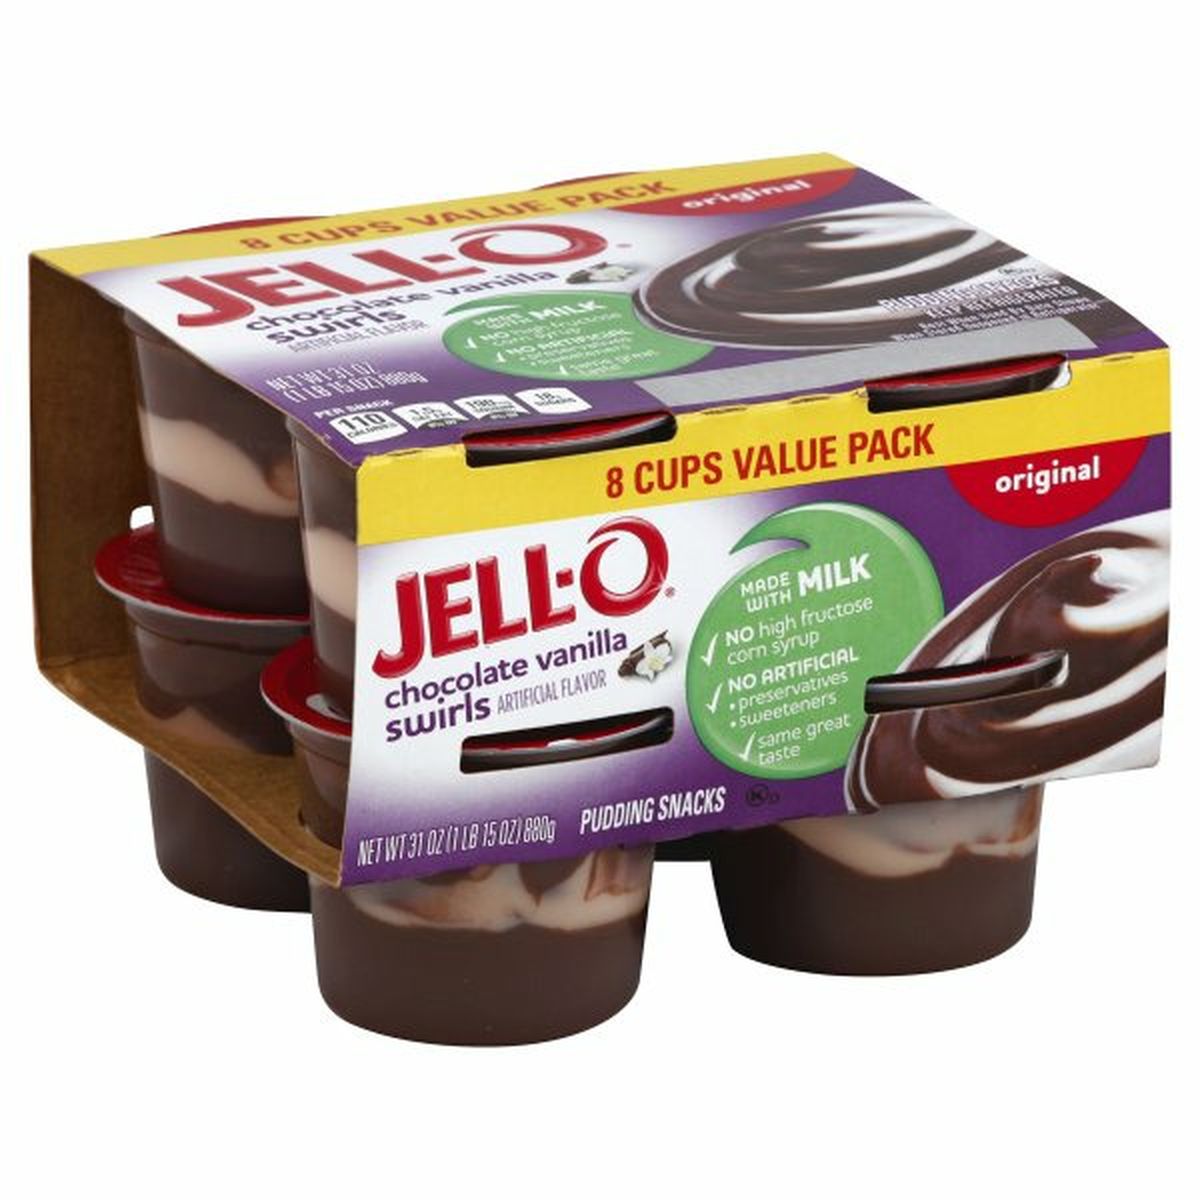 Calories in Jell-O Pudding Snacks, Original, Chocolate Vanilla Swirls, Value Pack